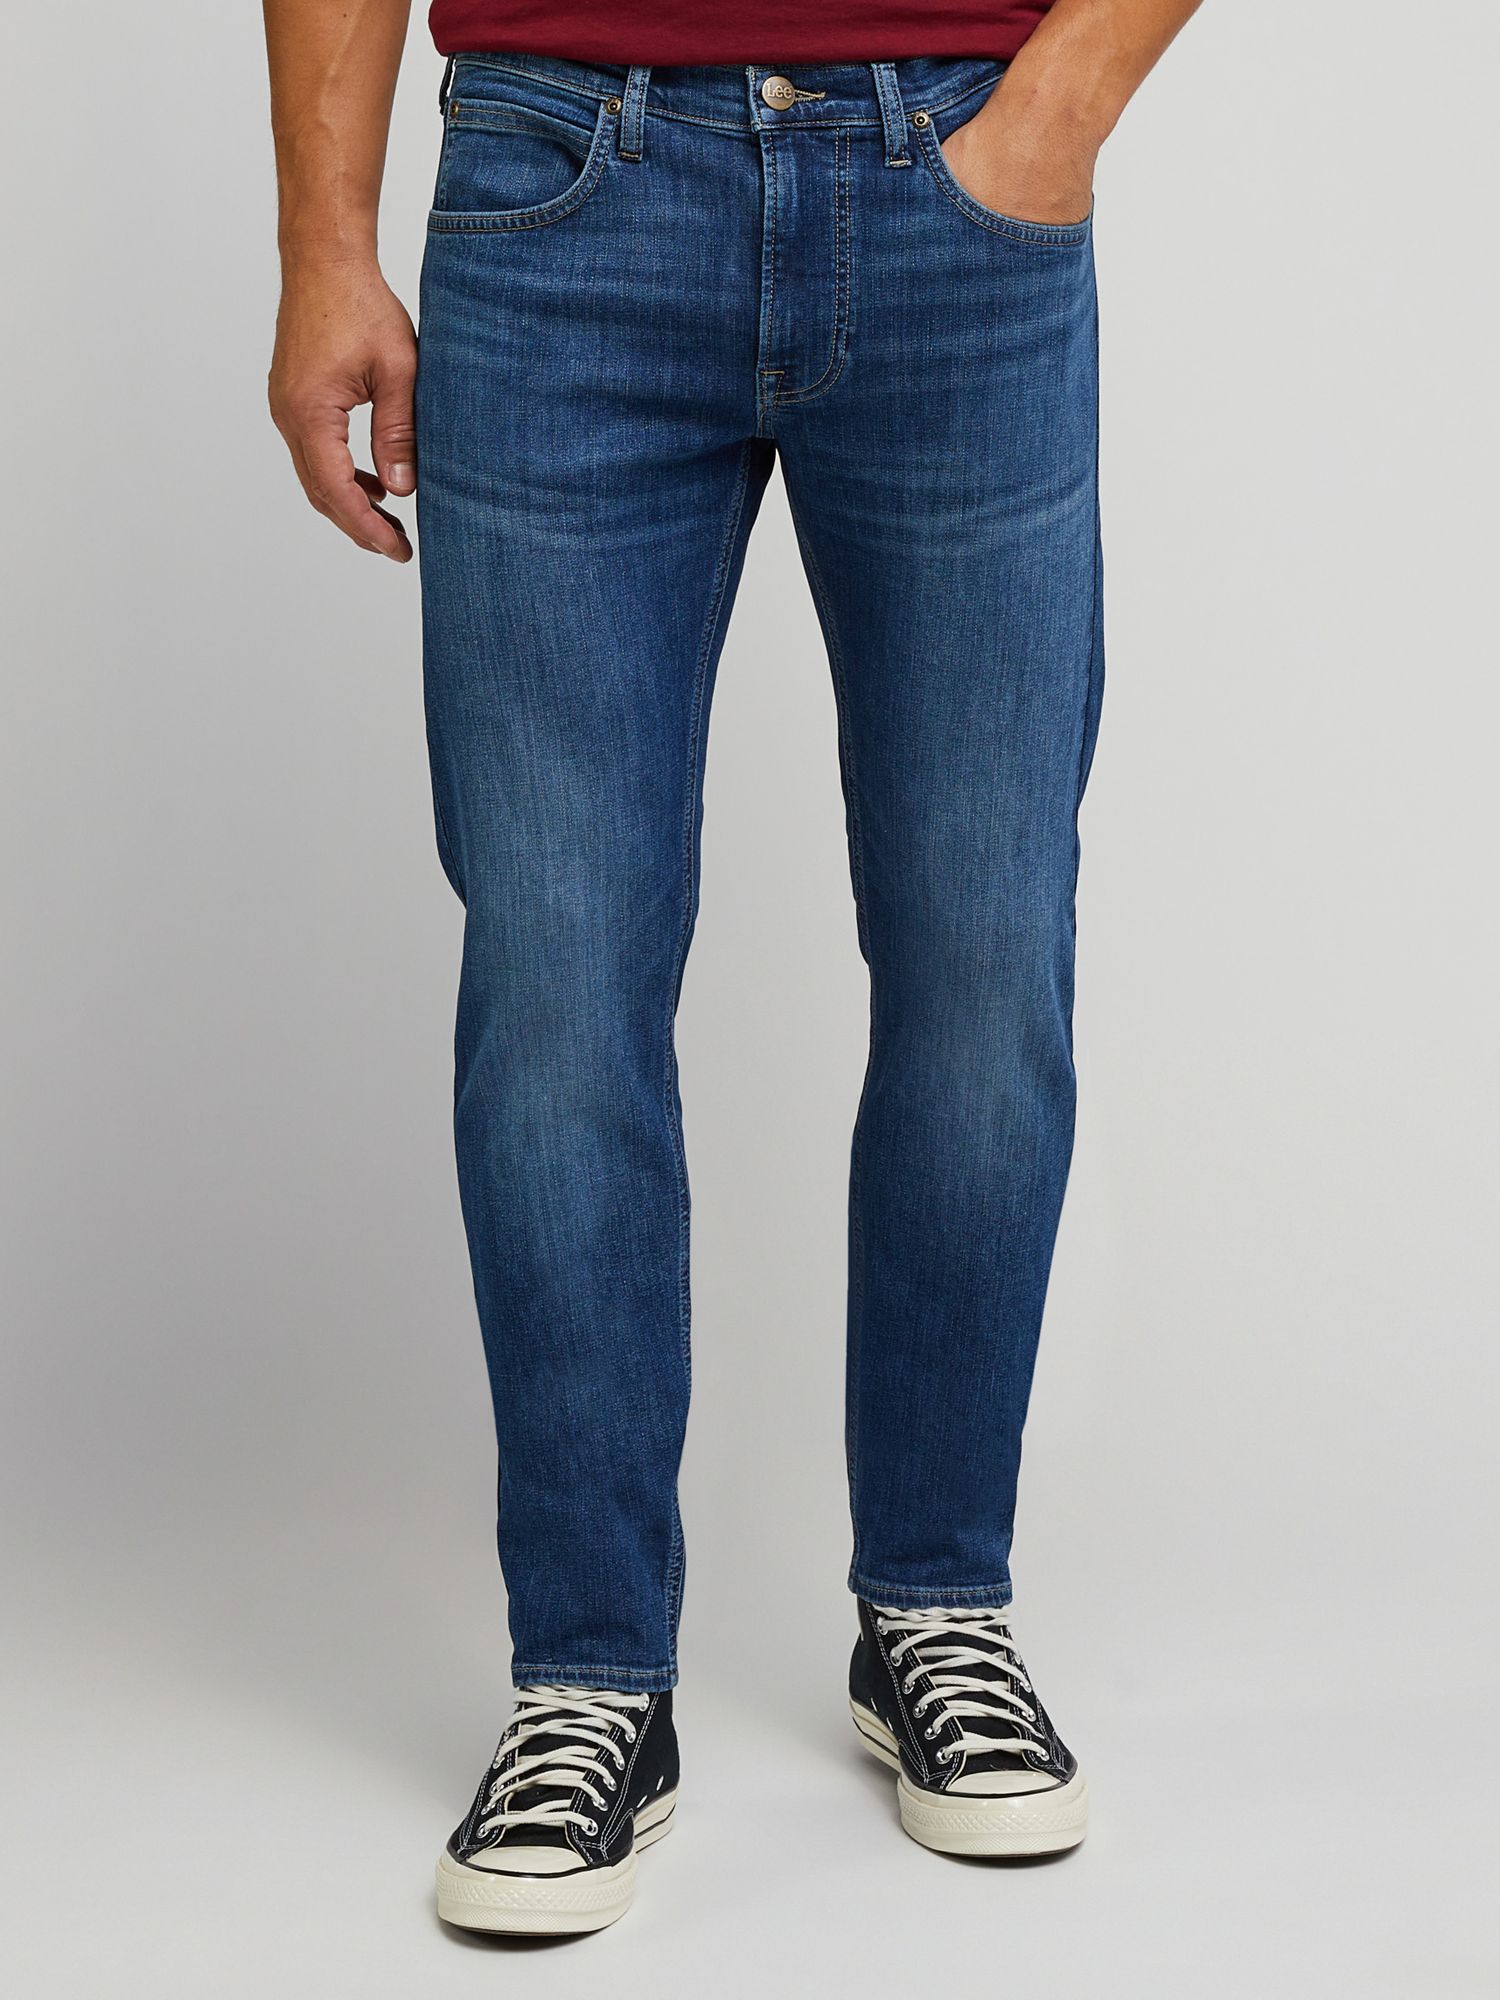 Lee Luke Slim Fit Tapered Jeans, East New York at John Lewis & Partners